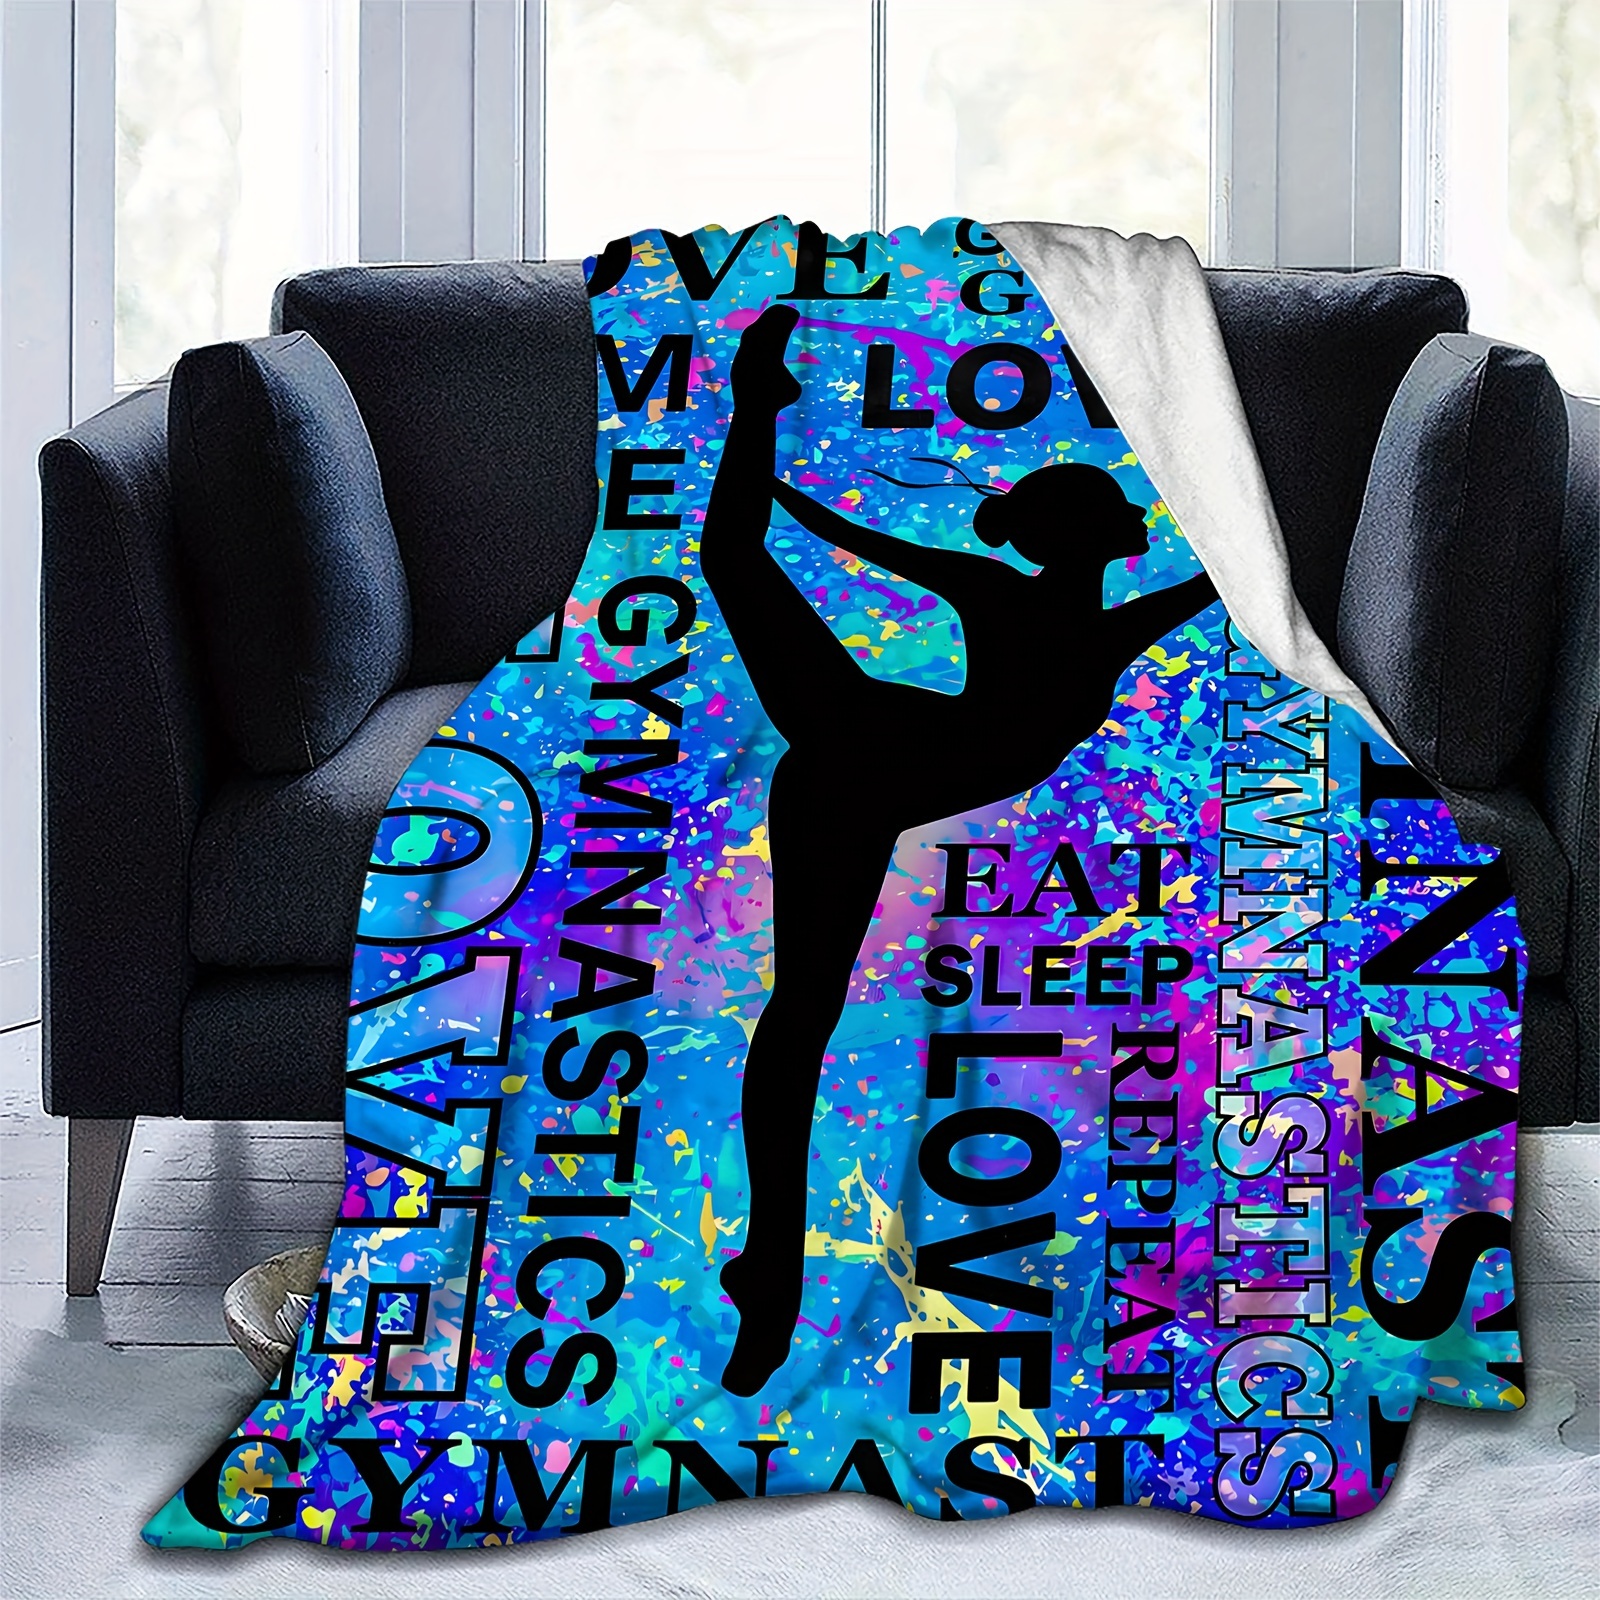  Mubpean Gymnastics Gifts Blanket 50x40 - Gymnastic